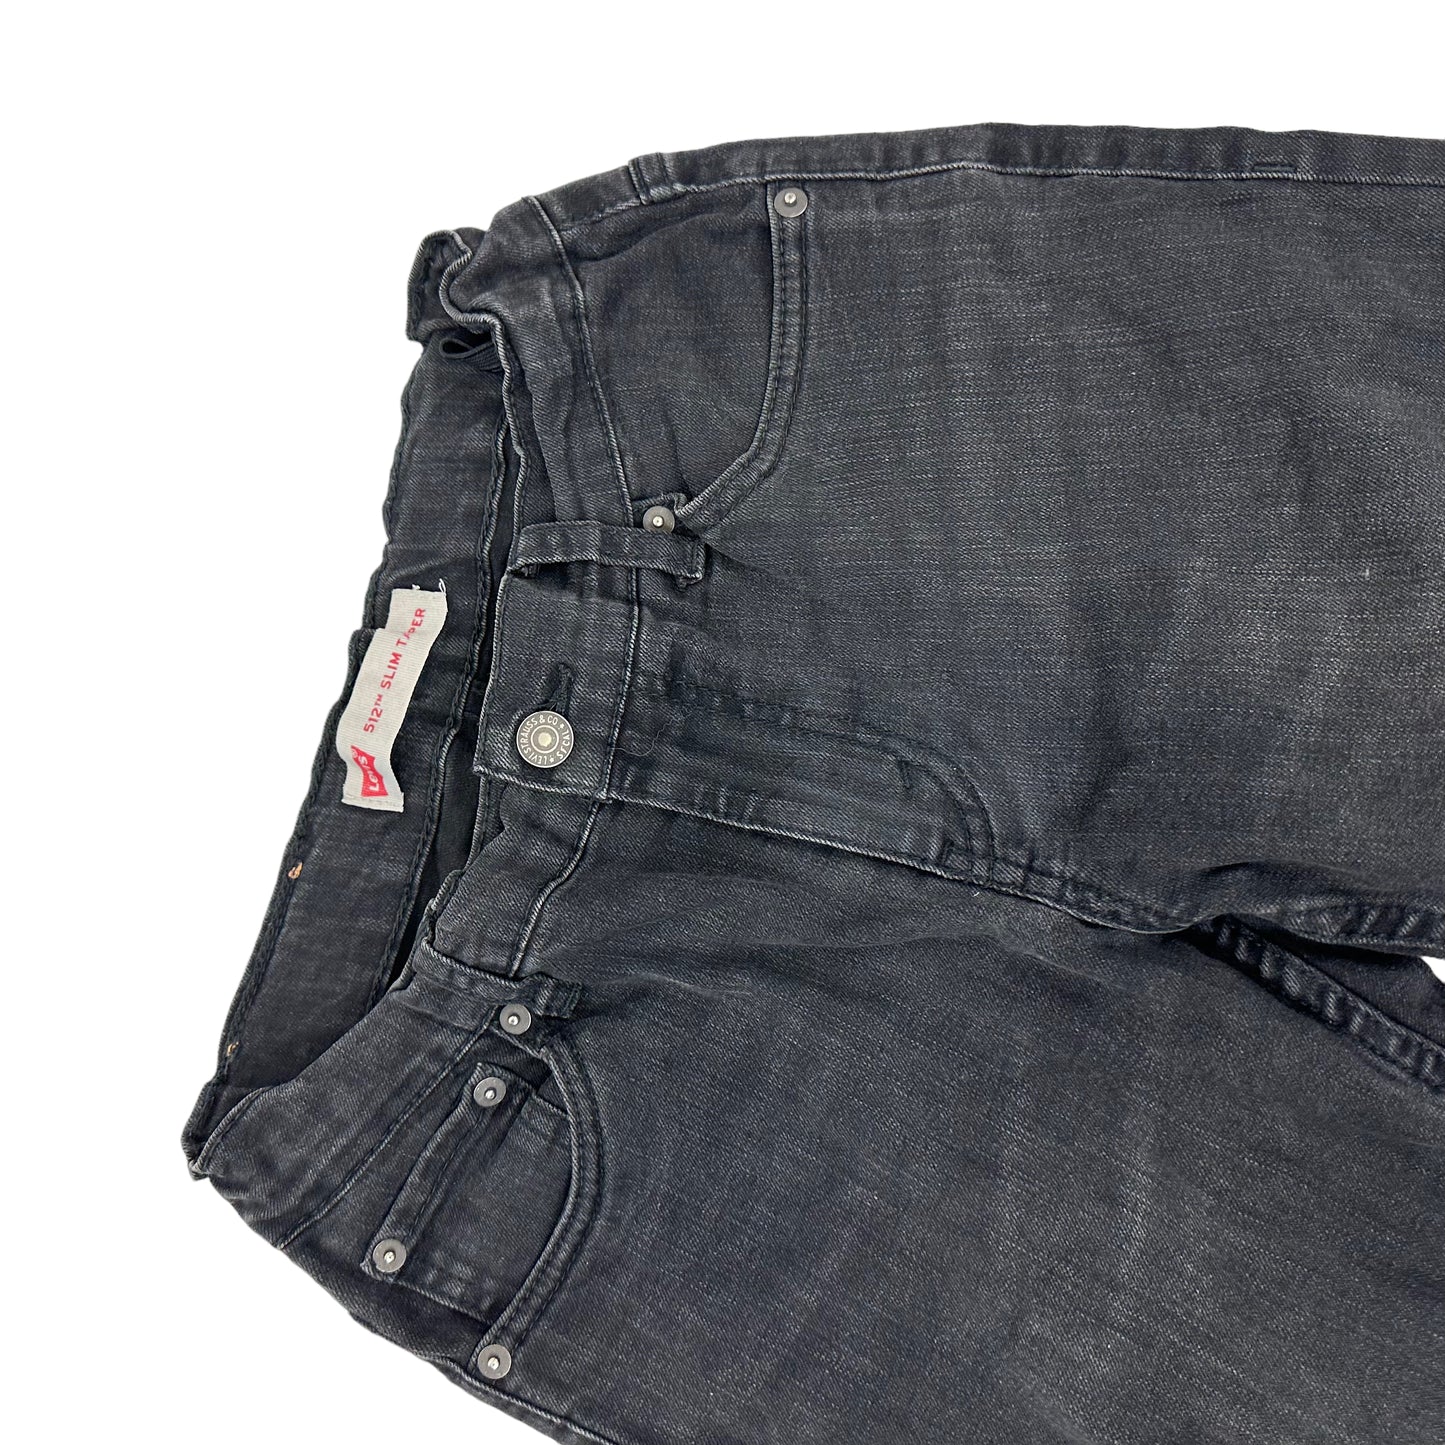 Levi's 512 Slim Taper Jeans (Age 14)